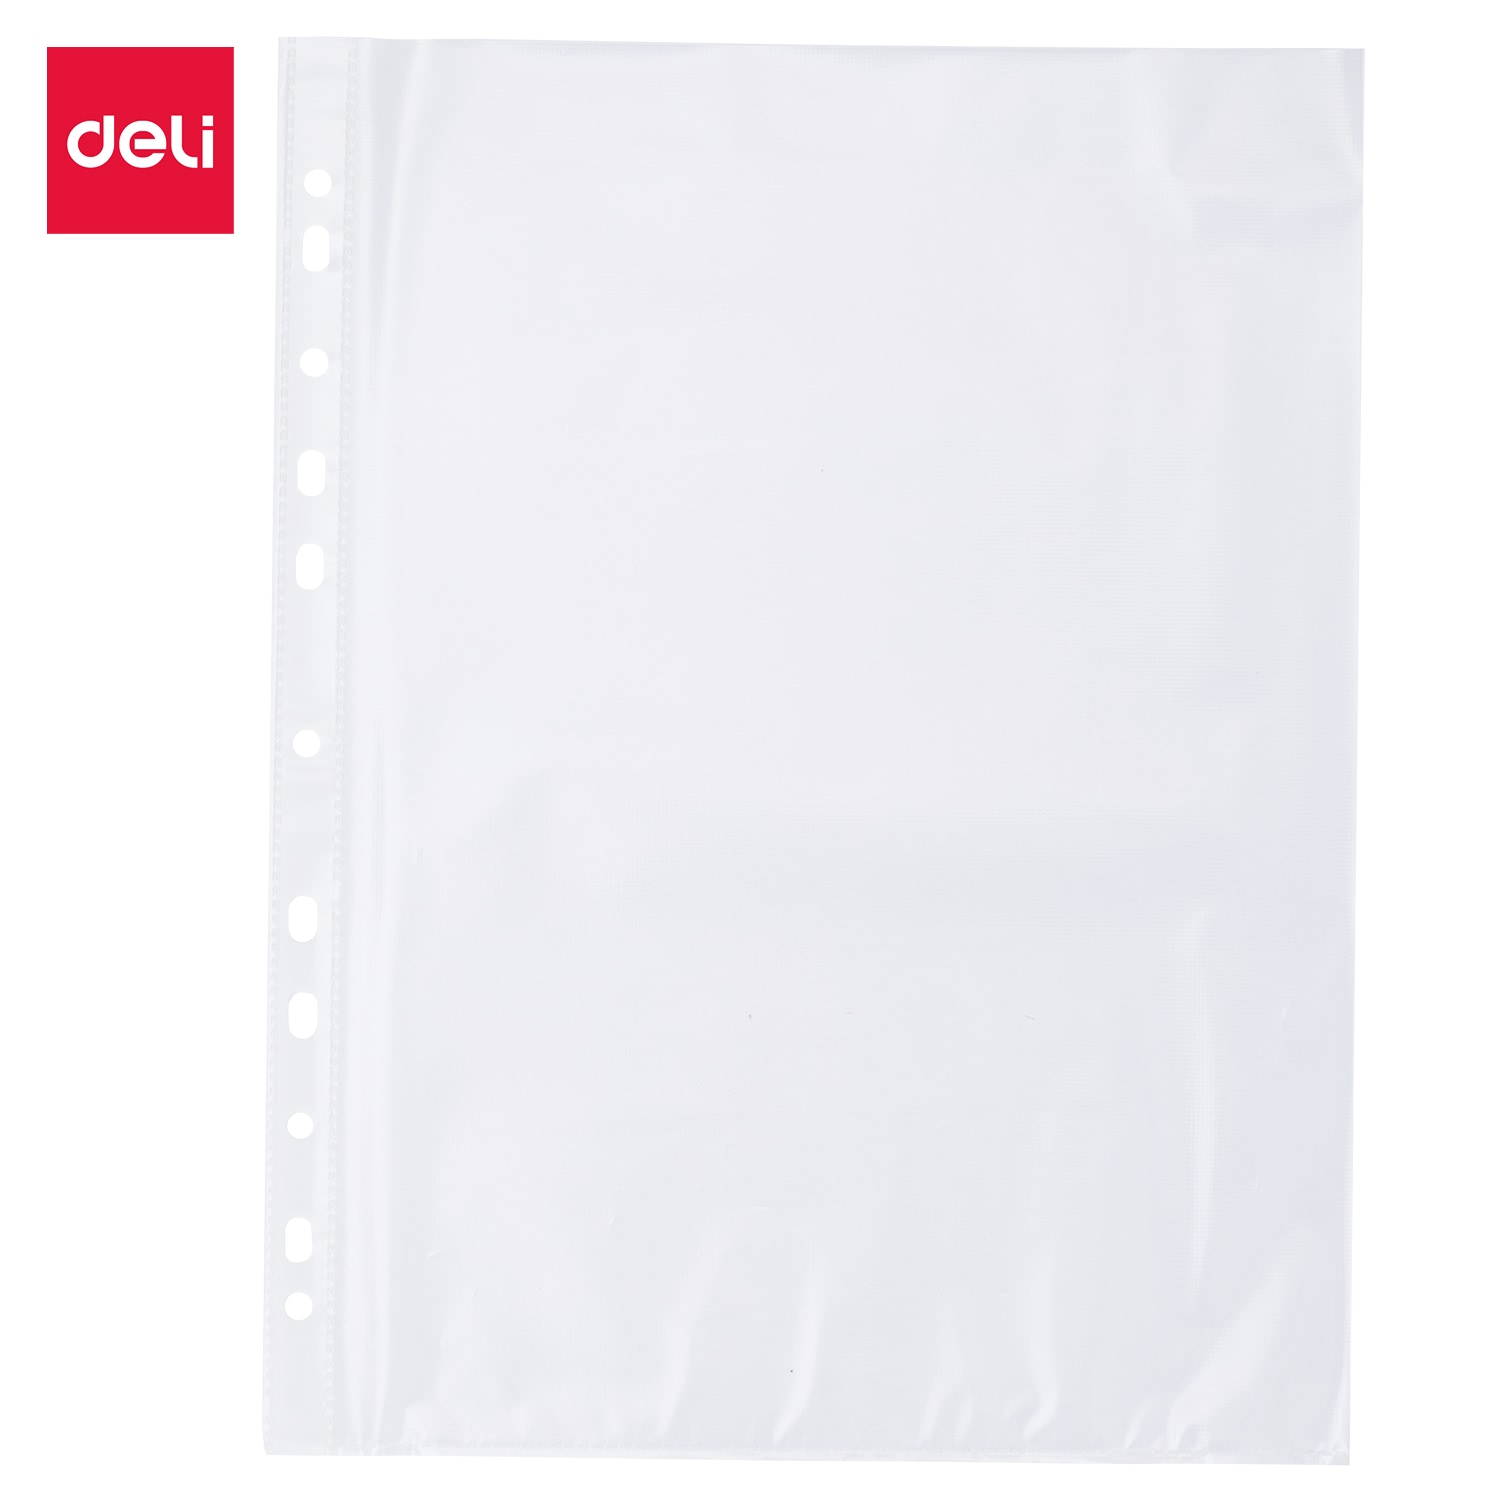 Tấm bảo vệ tài liệu DELI – Cỡ A4 11 lỗ 0.035mm – 100 chiếc/túi – E5712